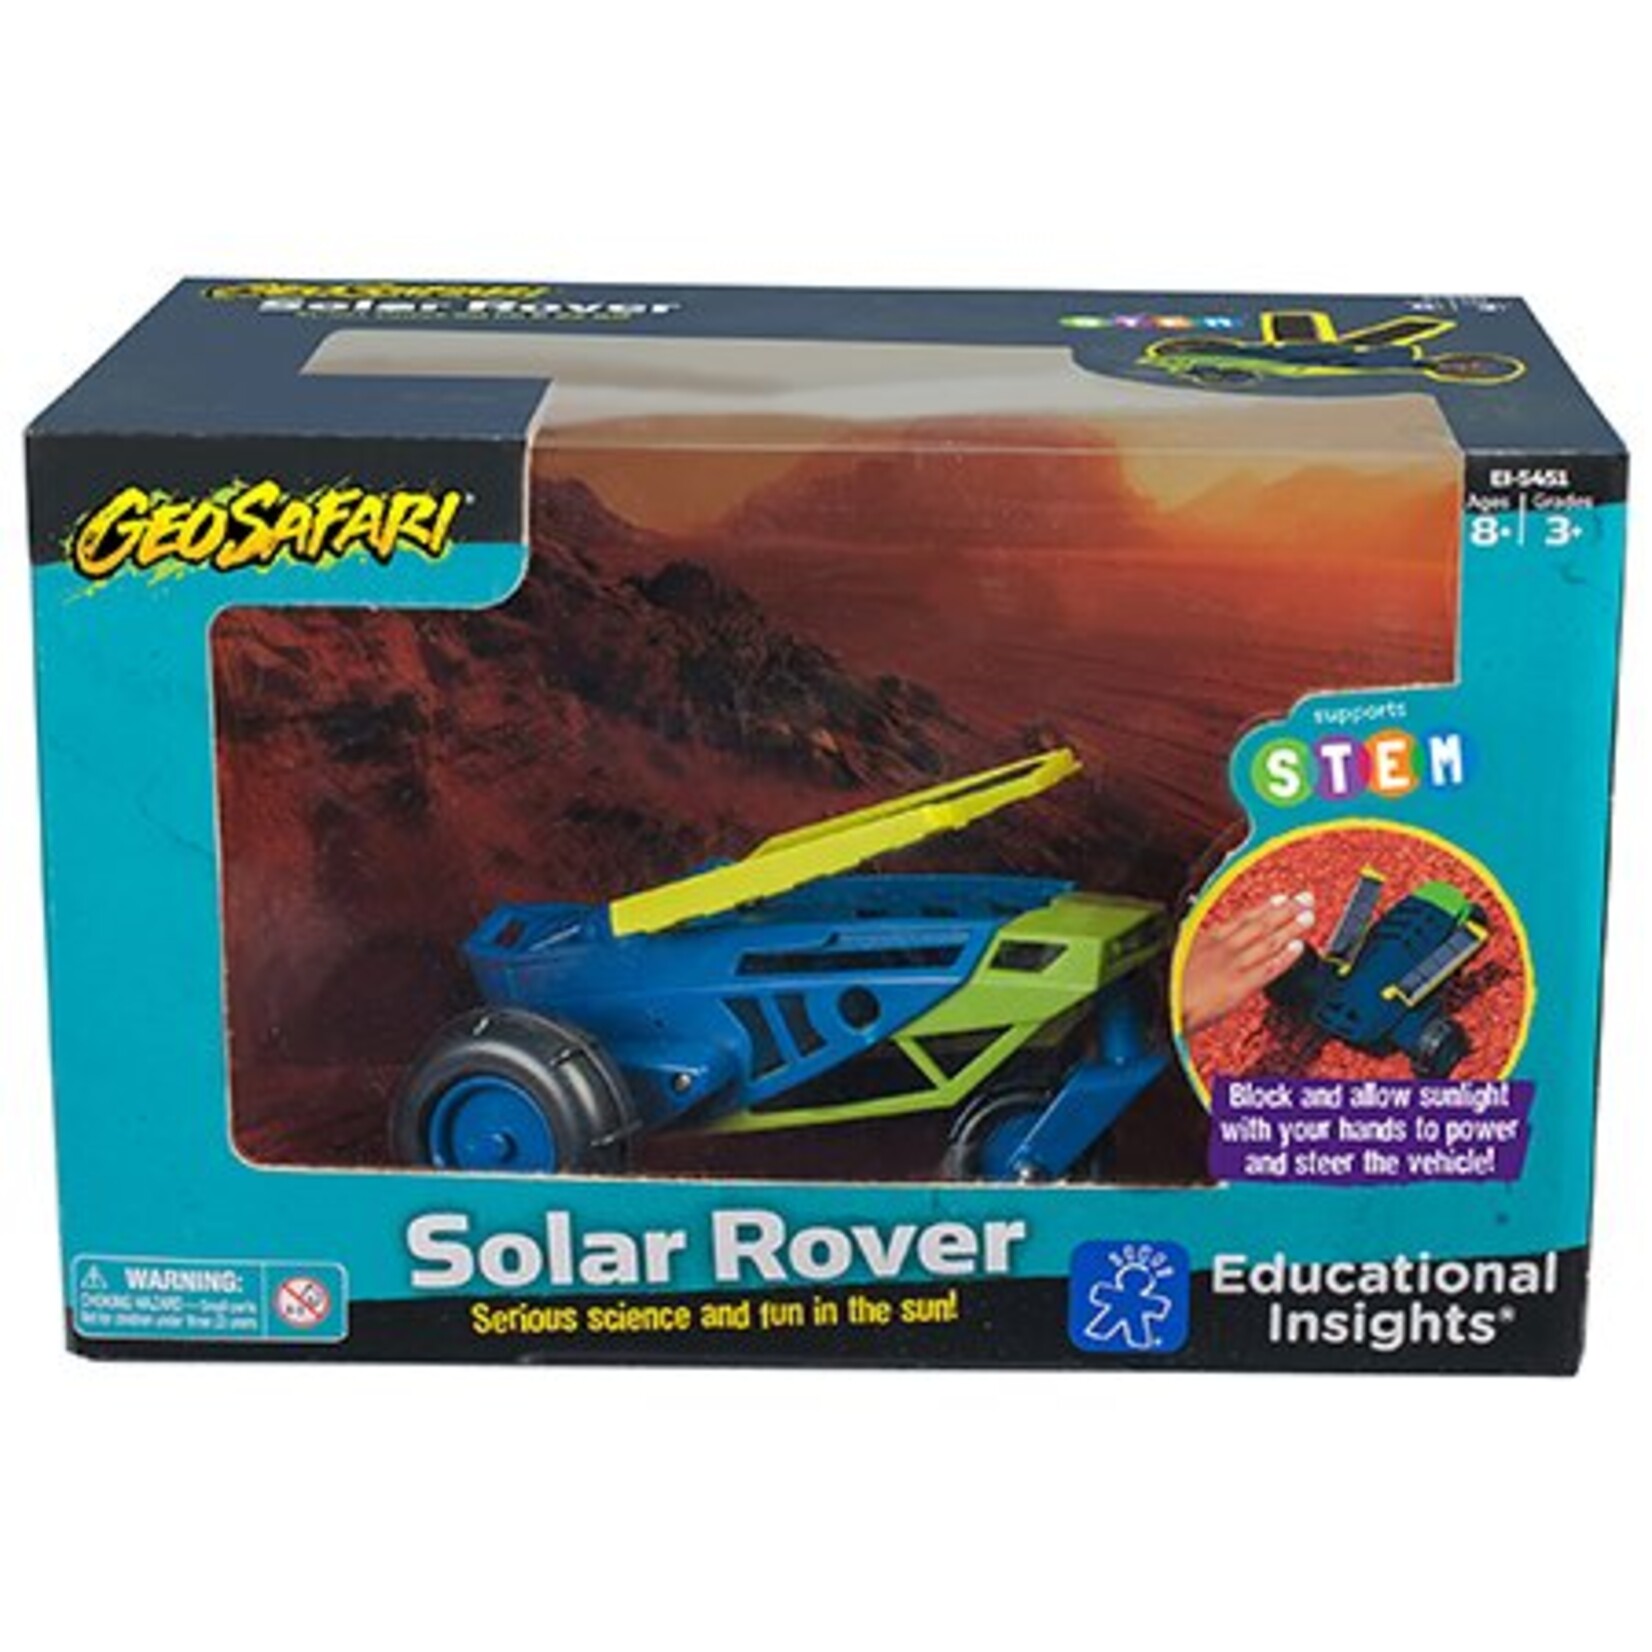 Educational Insights Geosafari Solar Rover